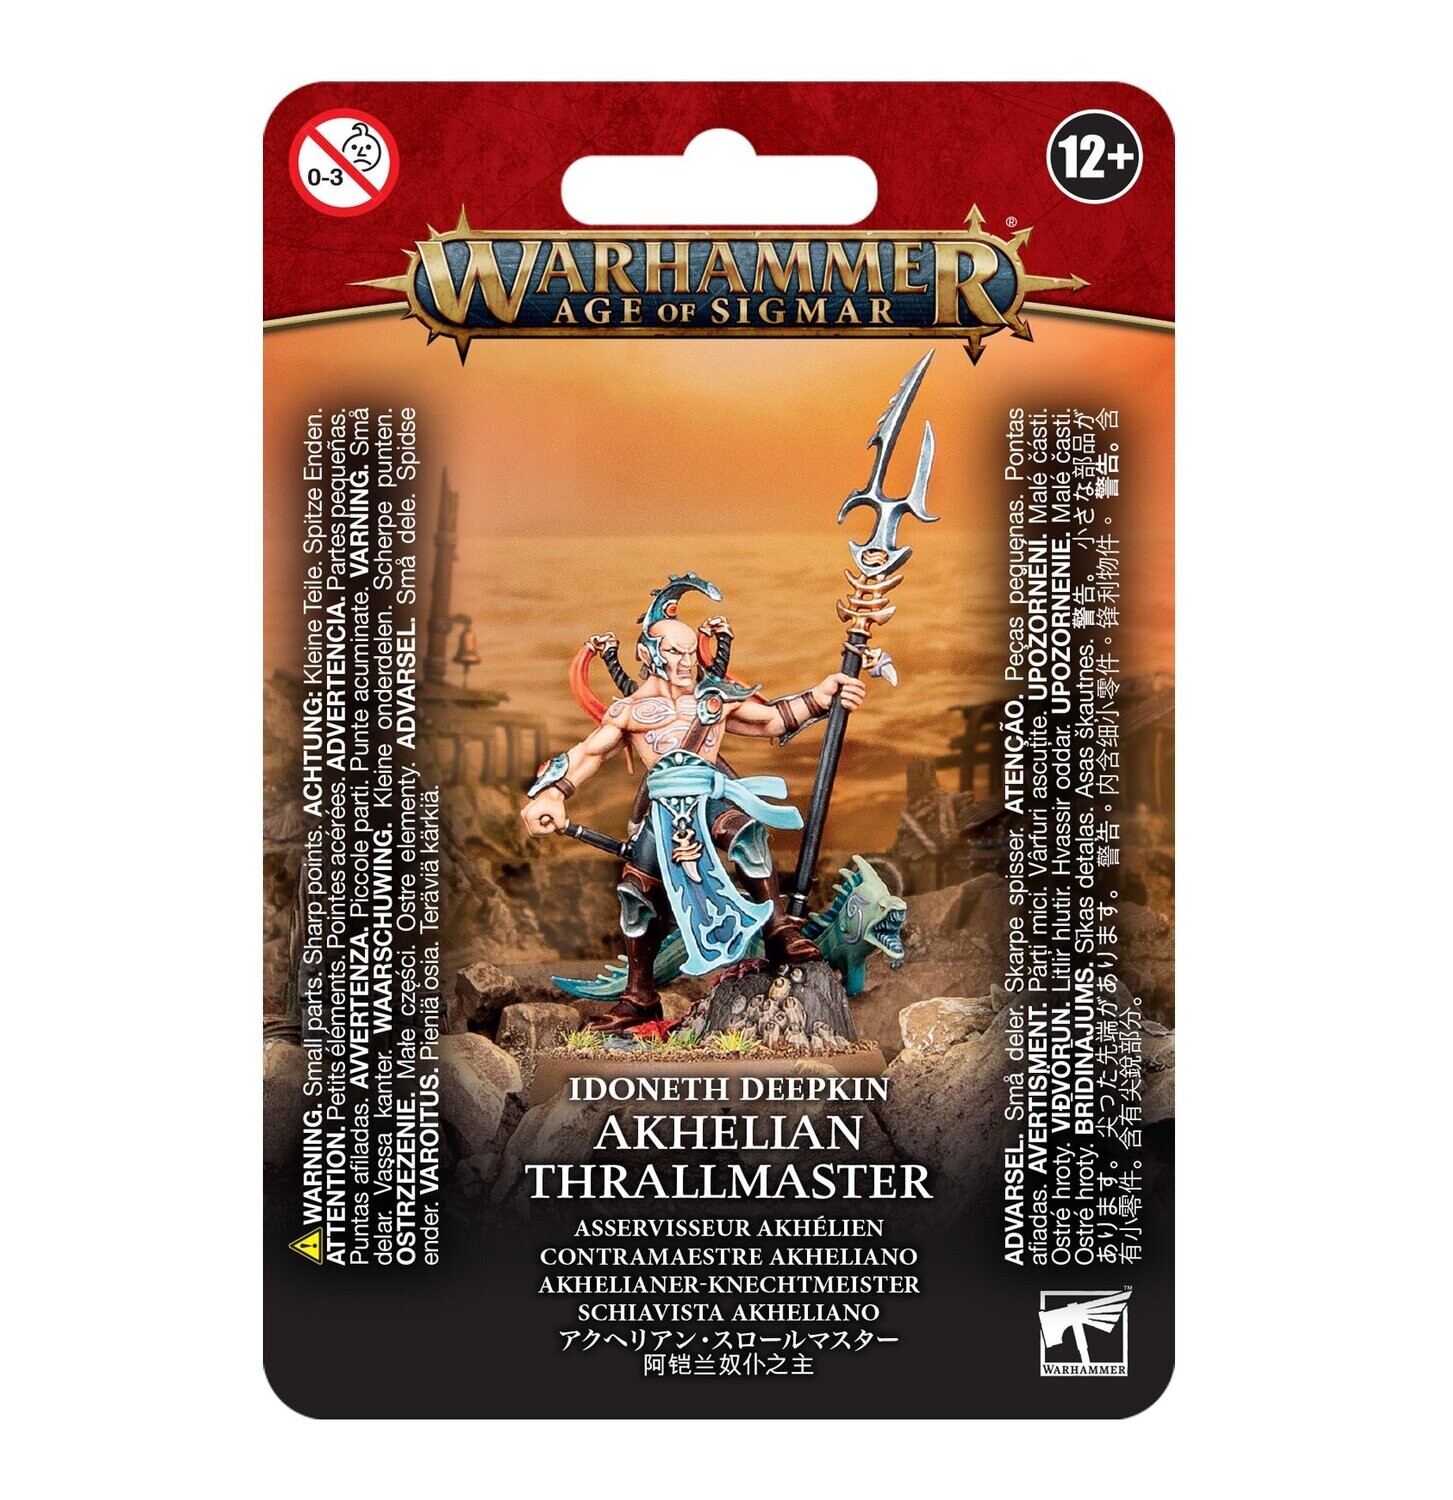 Akhelianer-Knechtmeister - Akhelina Thrallmaster - Idoneth Deepkin - Warhammer Age of Sigmar - Games Workshop